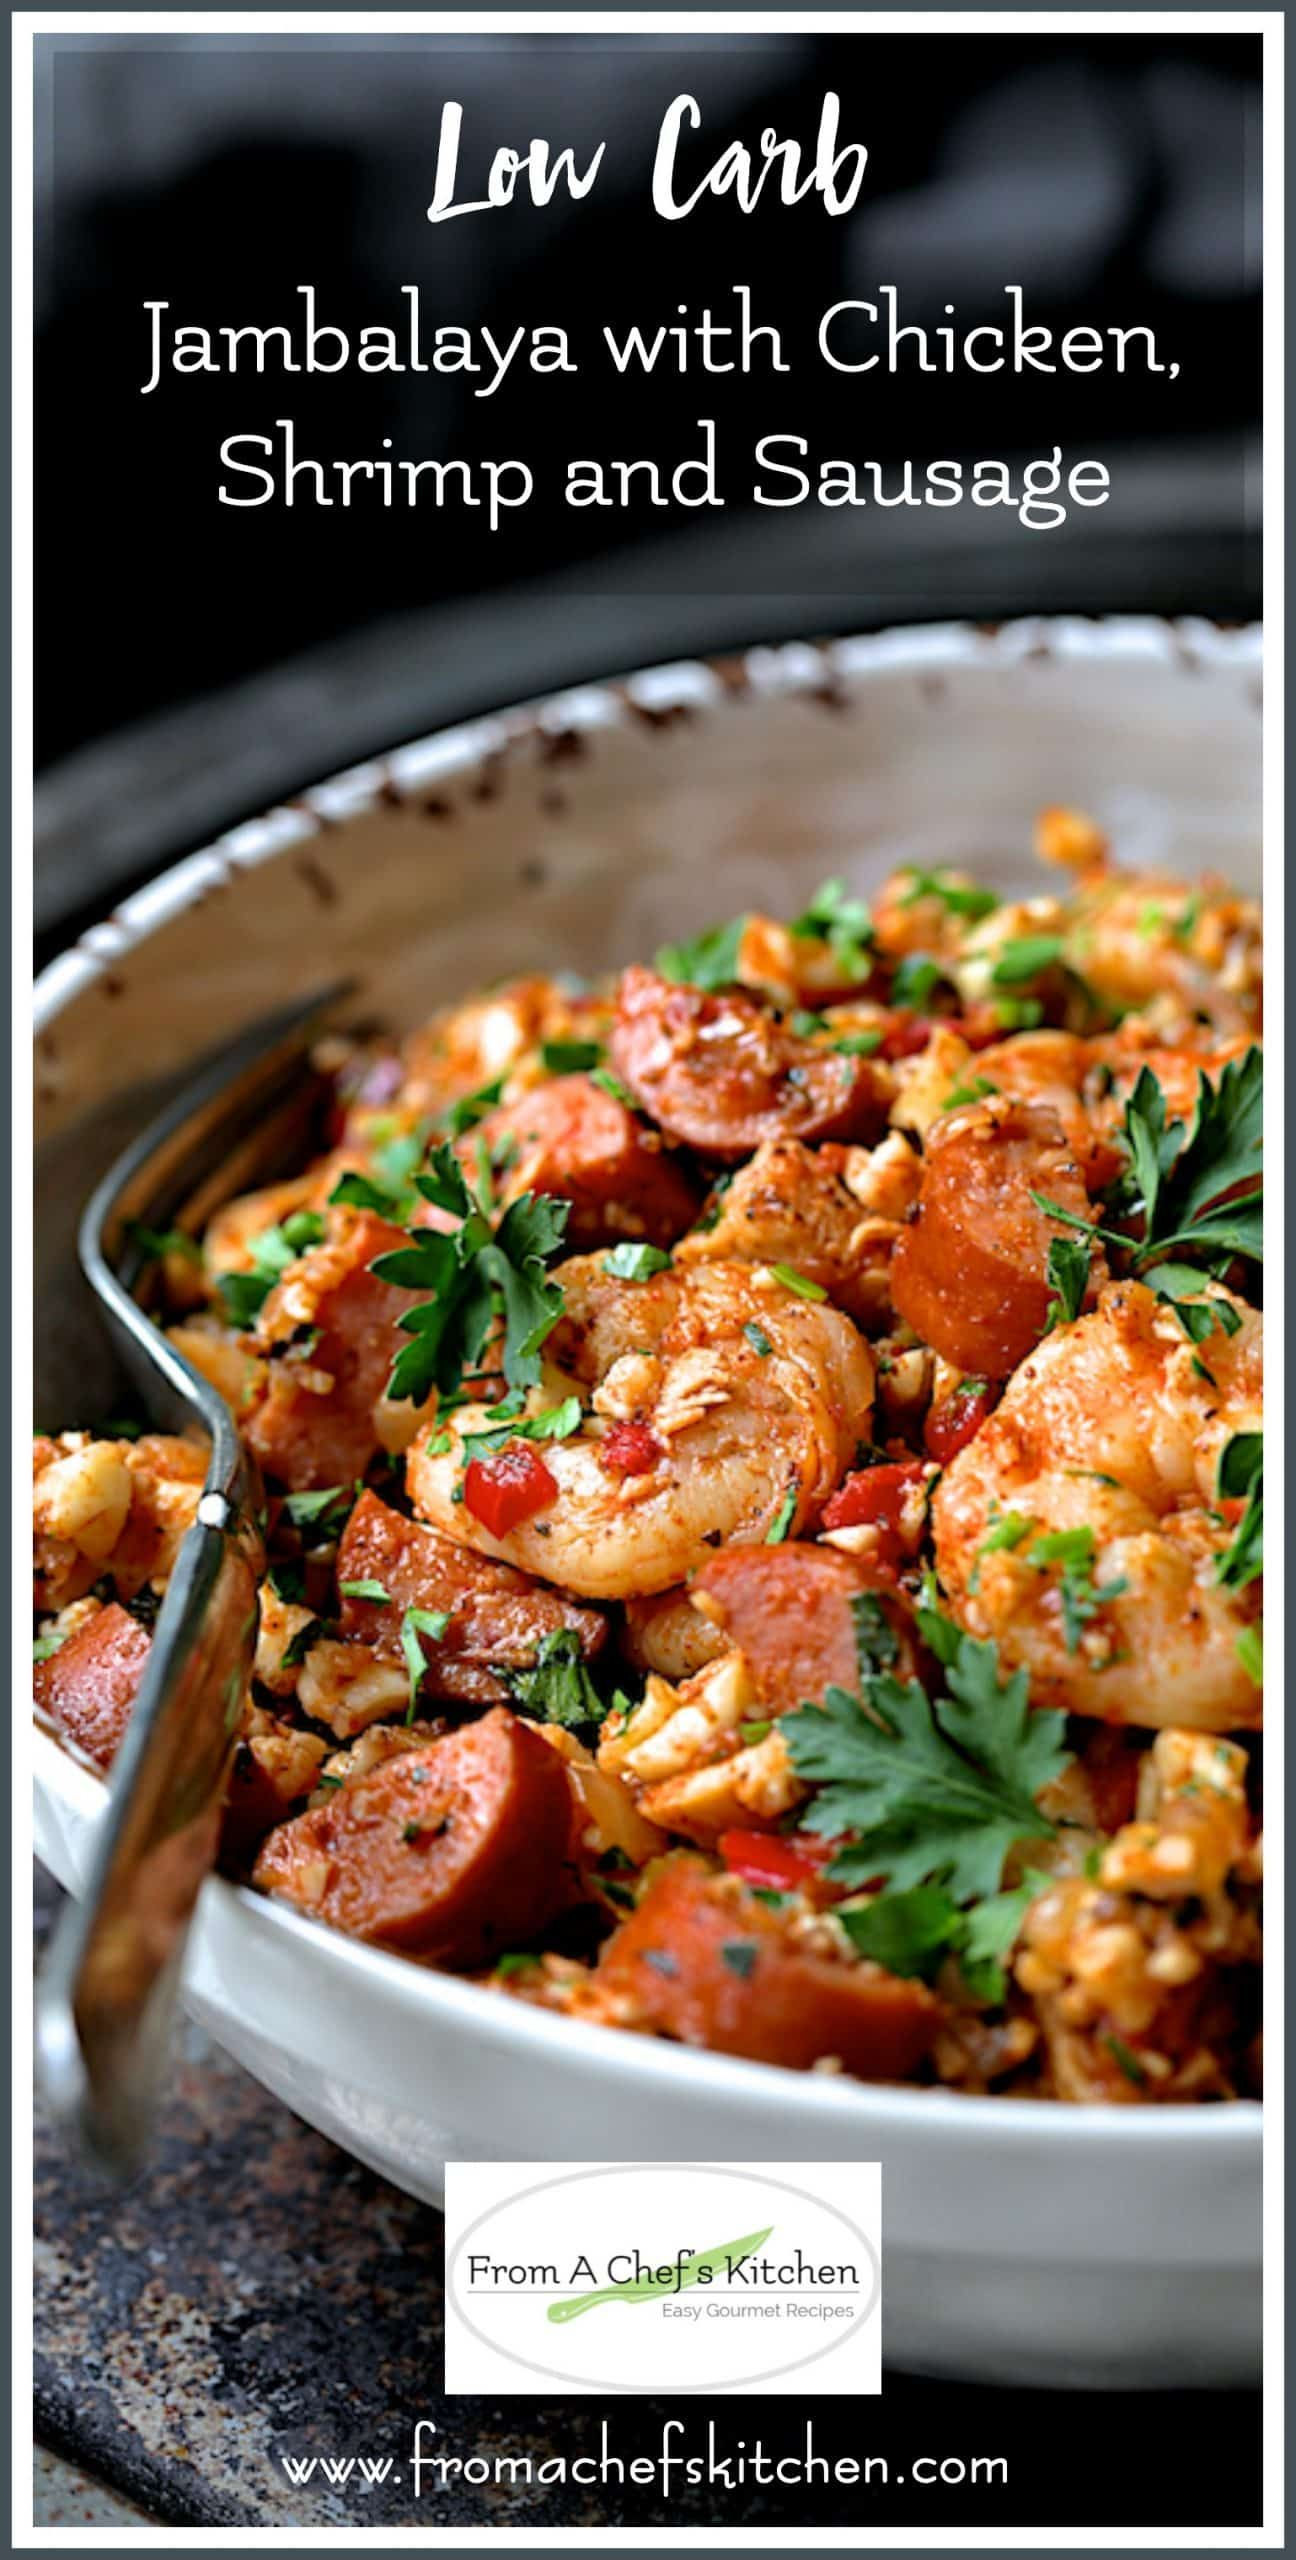 Low Carb Gourmet Recipes
 Low Carb Jambalaya with Chicken Shrimp and Sausage is a